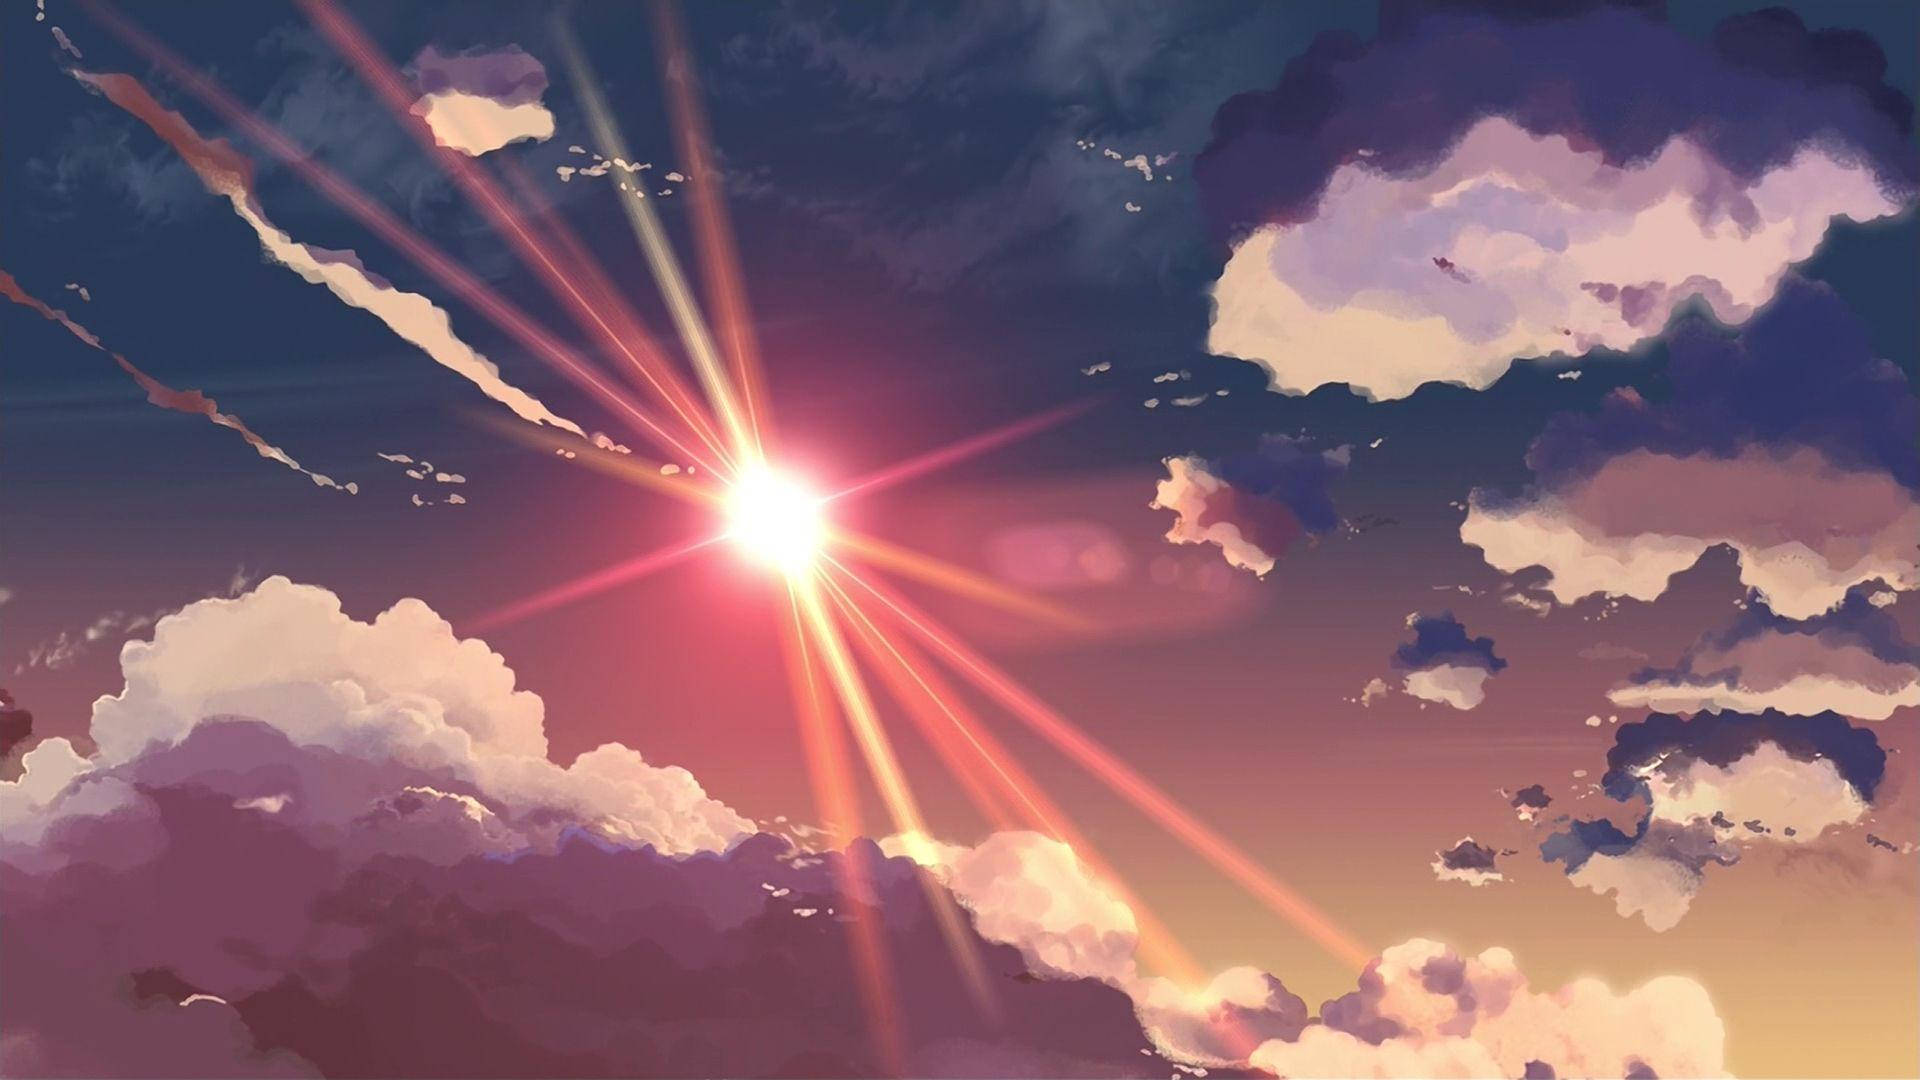 The Sun In The Sky Aesthetic Anime Scenery Wallpaper